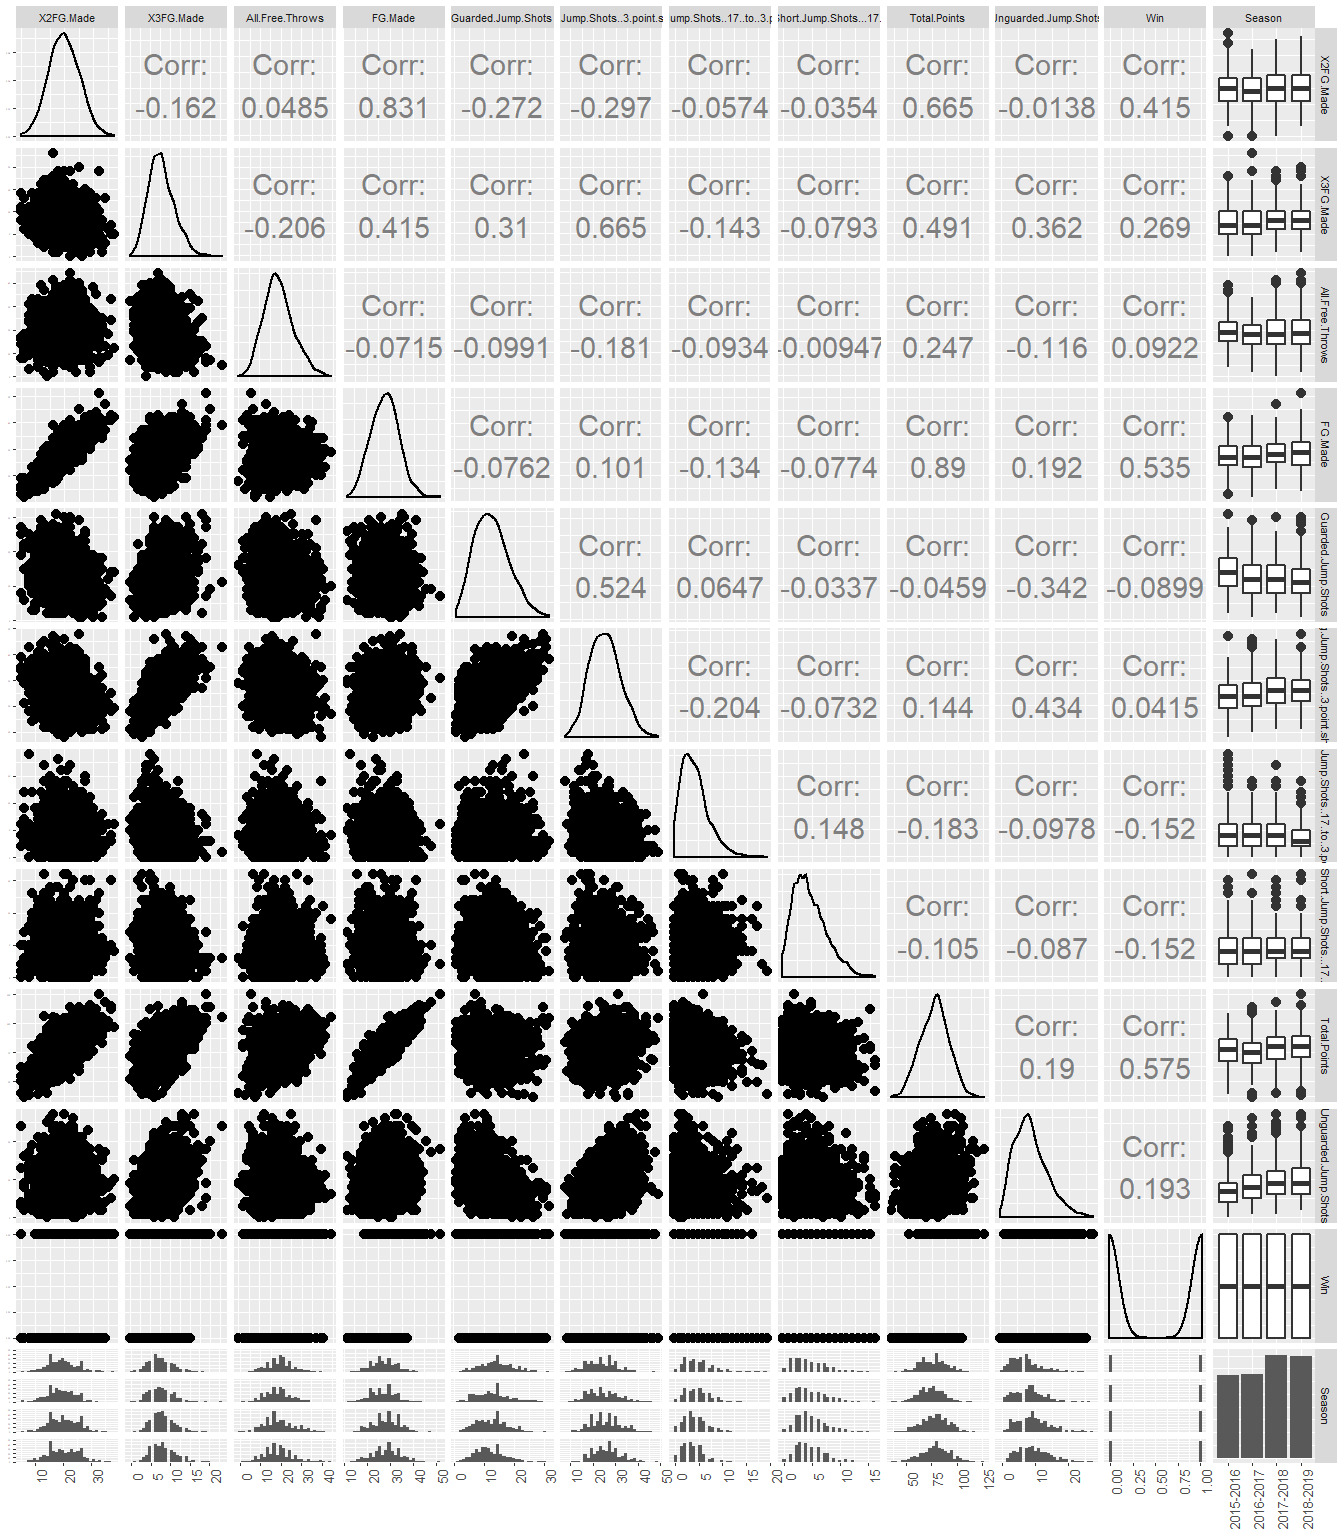 Plot Matrix for Shots Dataset